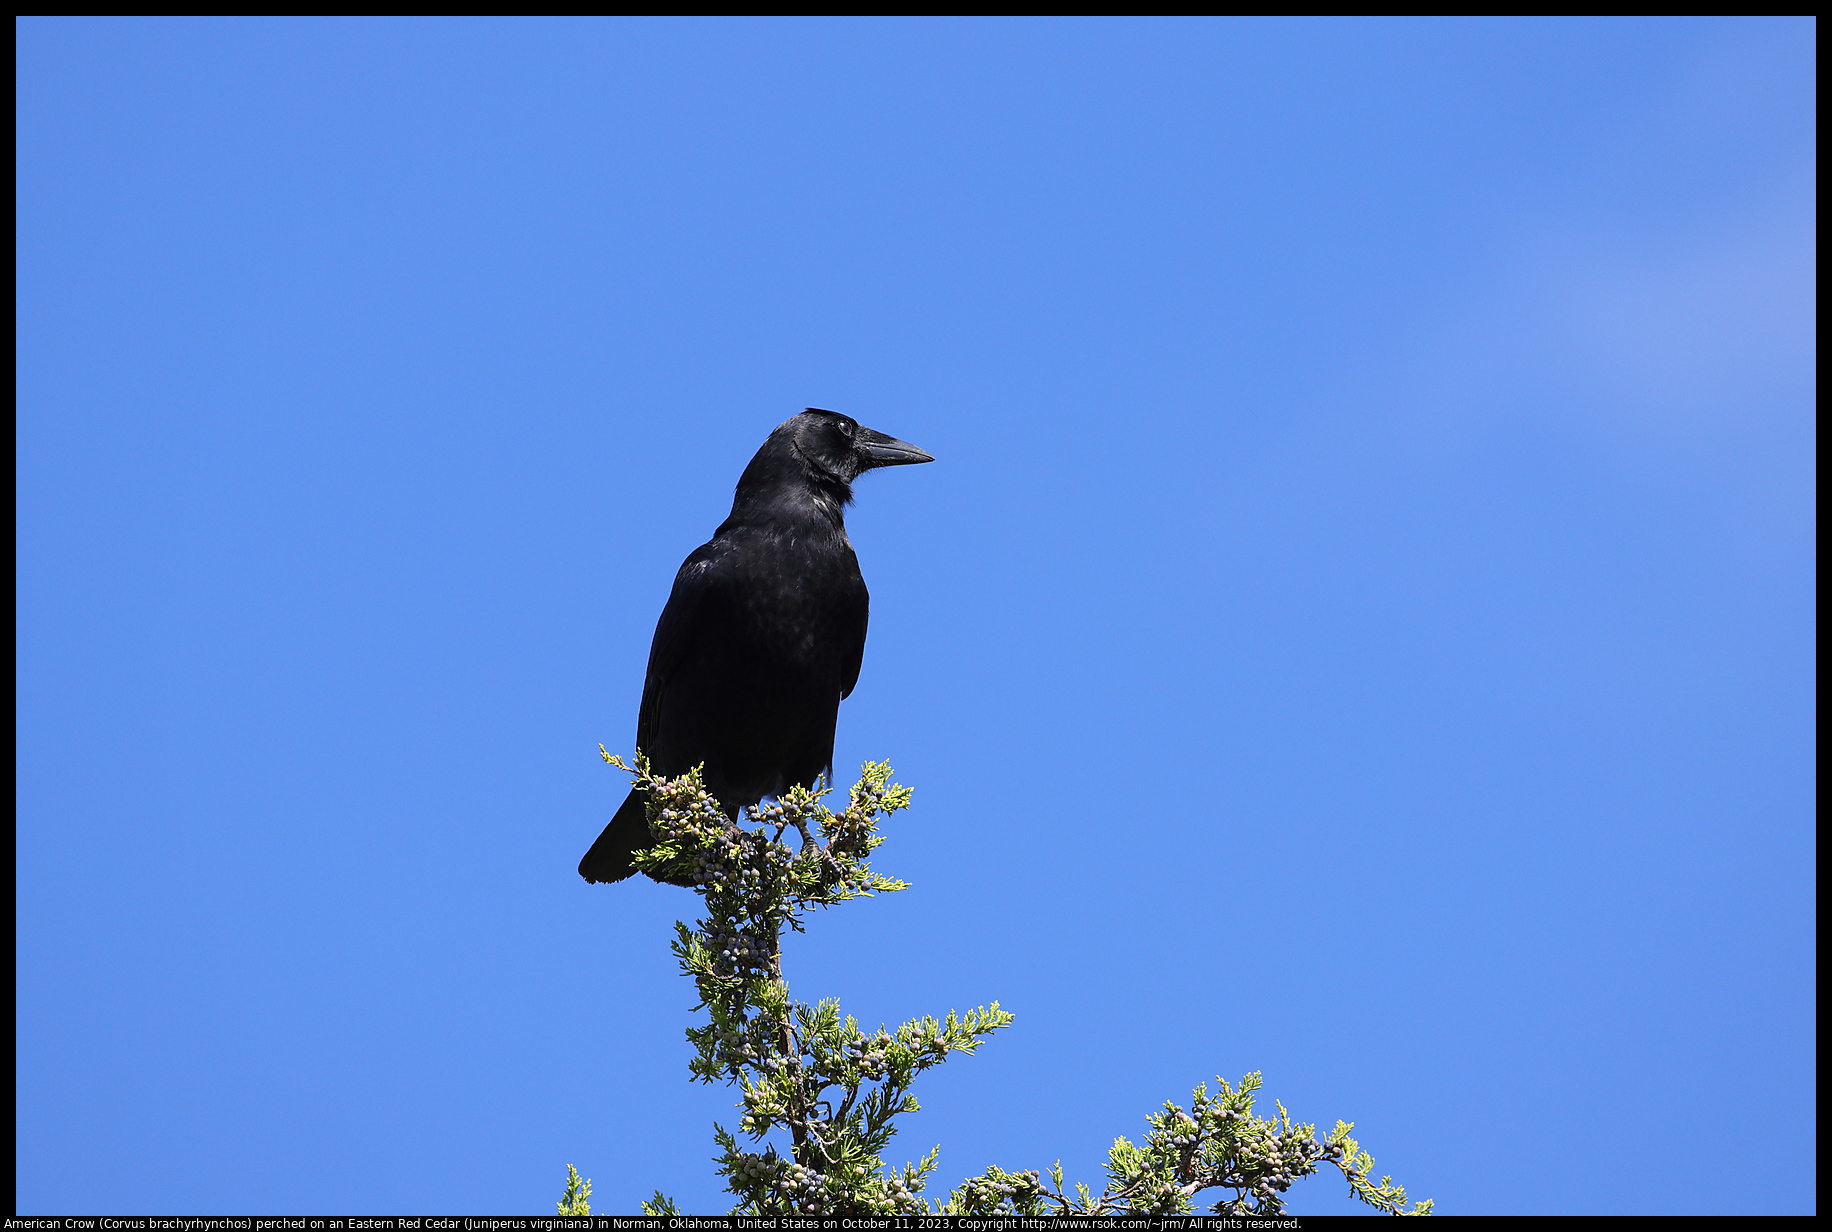 American Crow (Corvus brachyrhynchos) perched on an Eastern Red Cedar (Juniperus virginiana) in Norman, Oklahoma, United States, on October 11, 2023